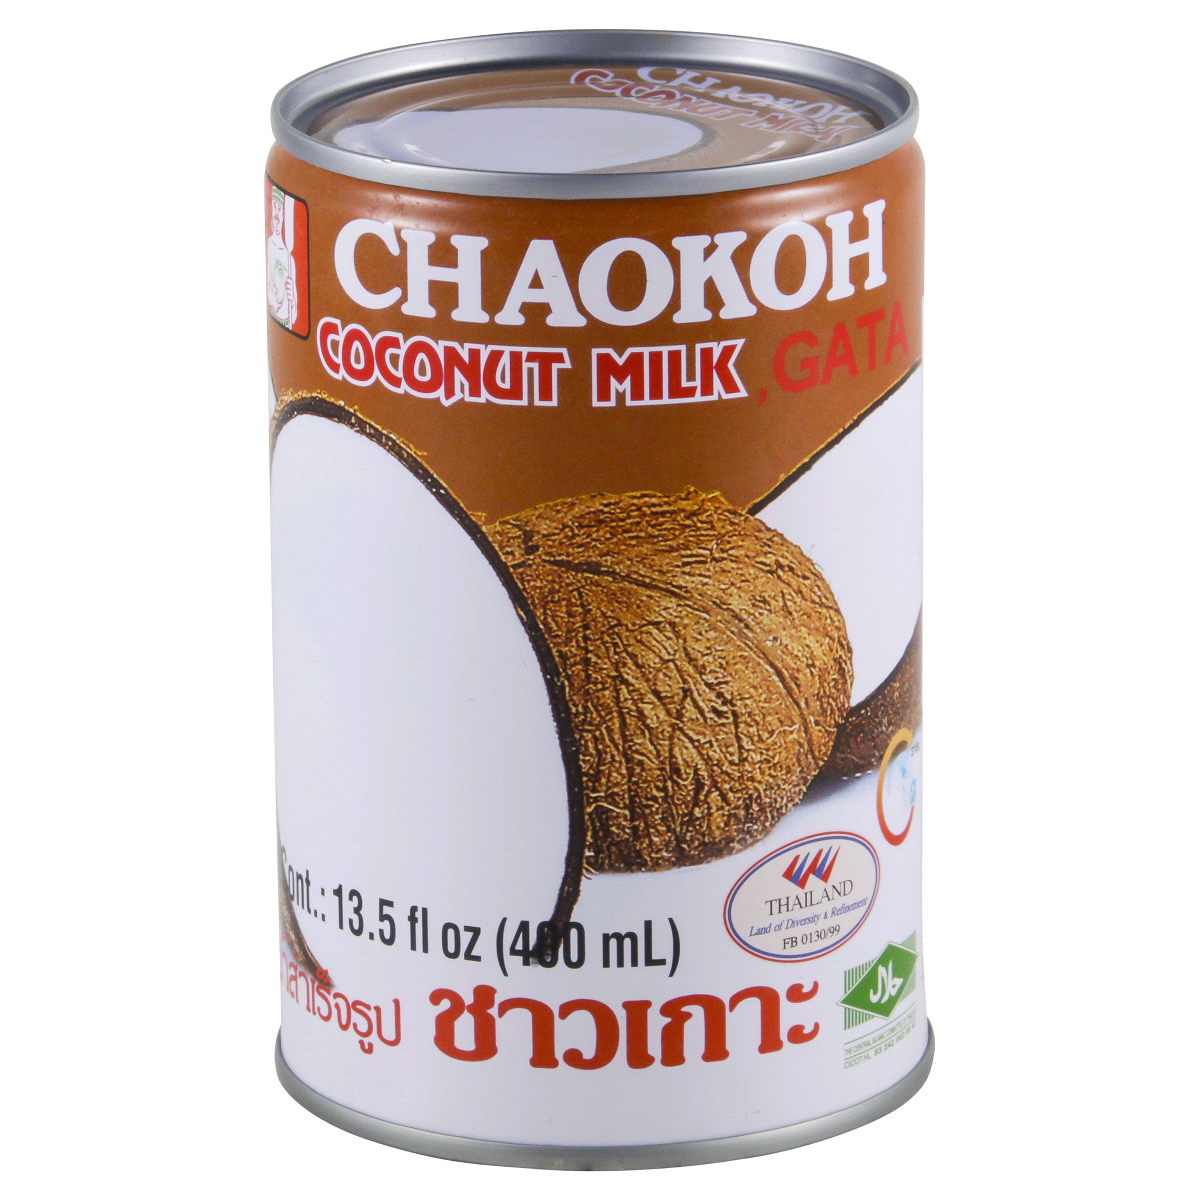 Chaohah Coconut Milk 400 ml